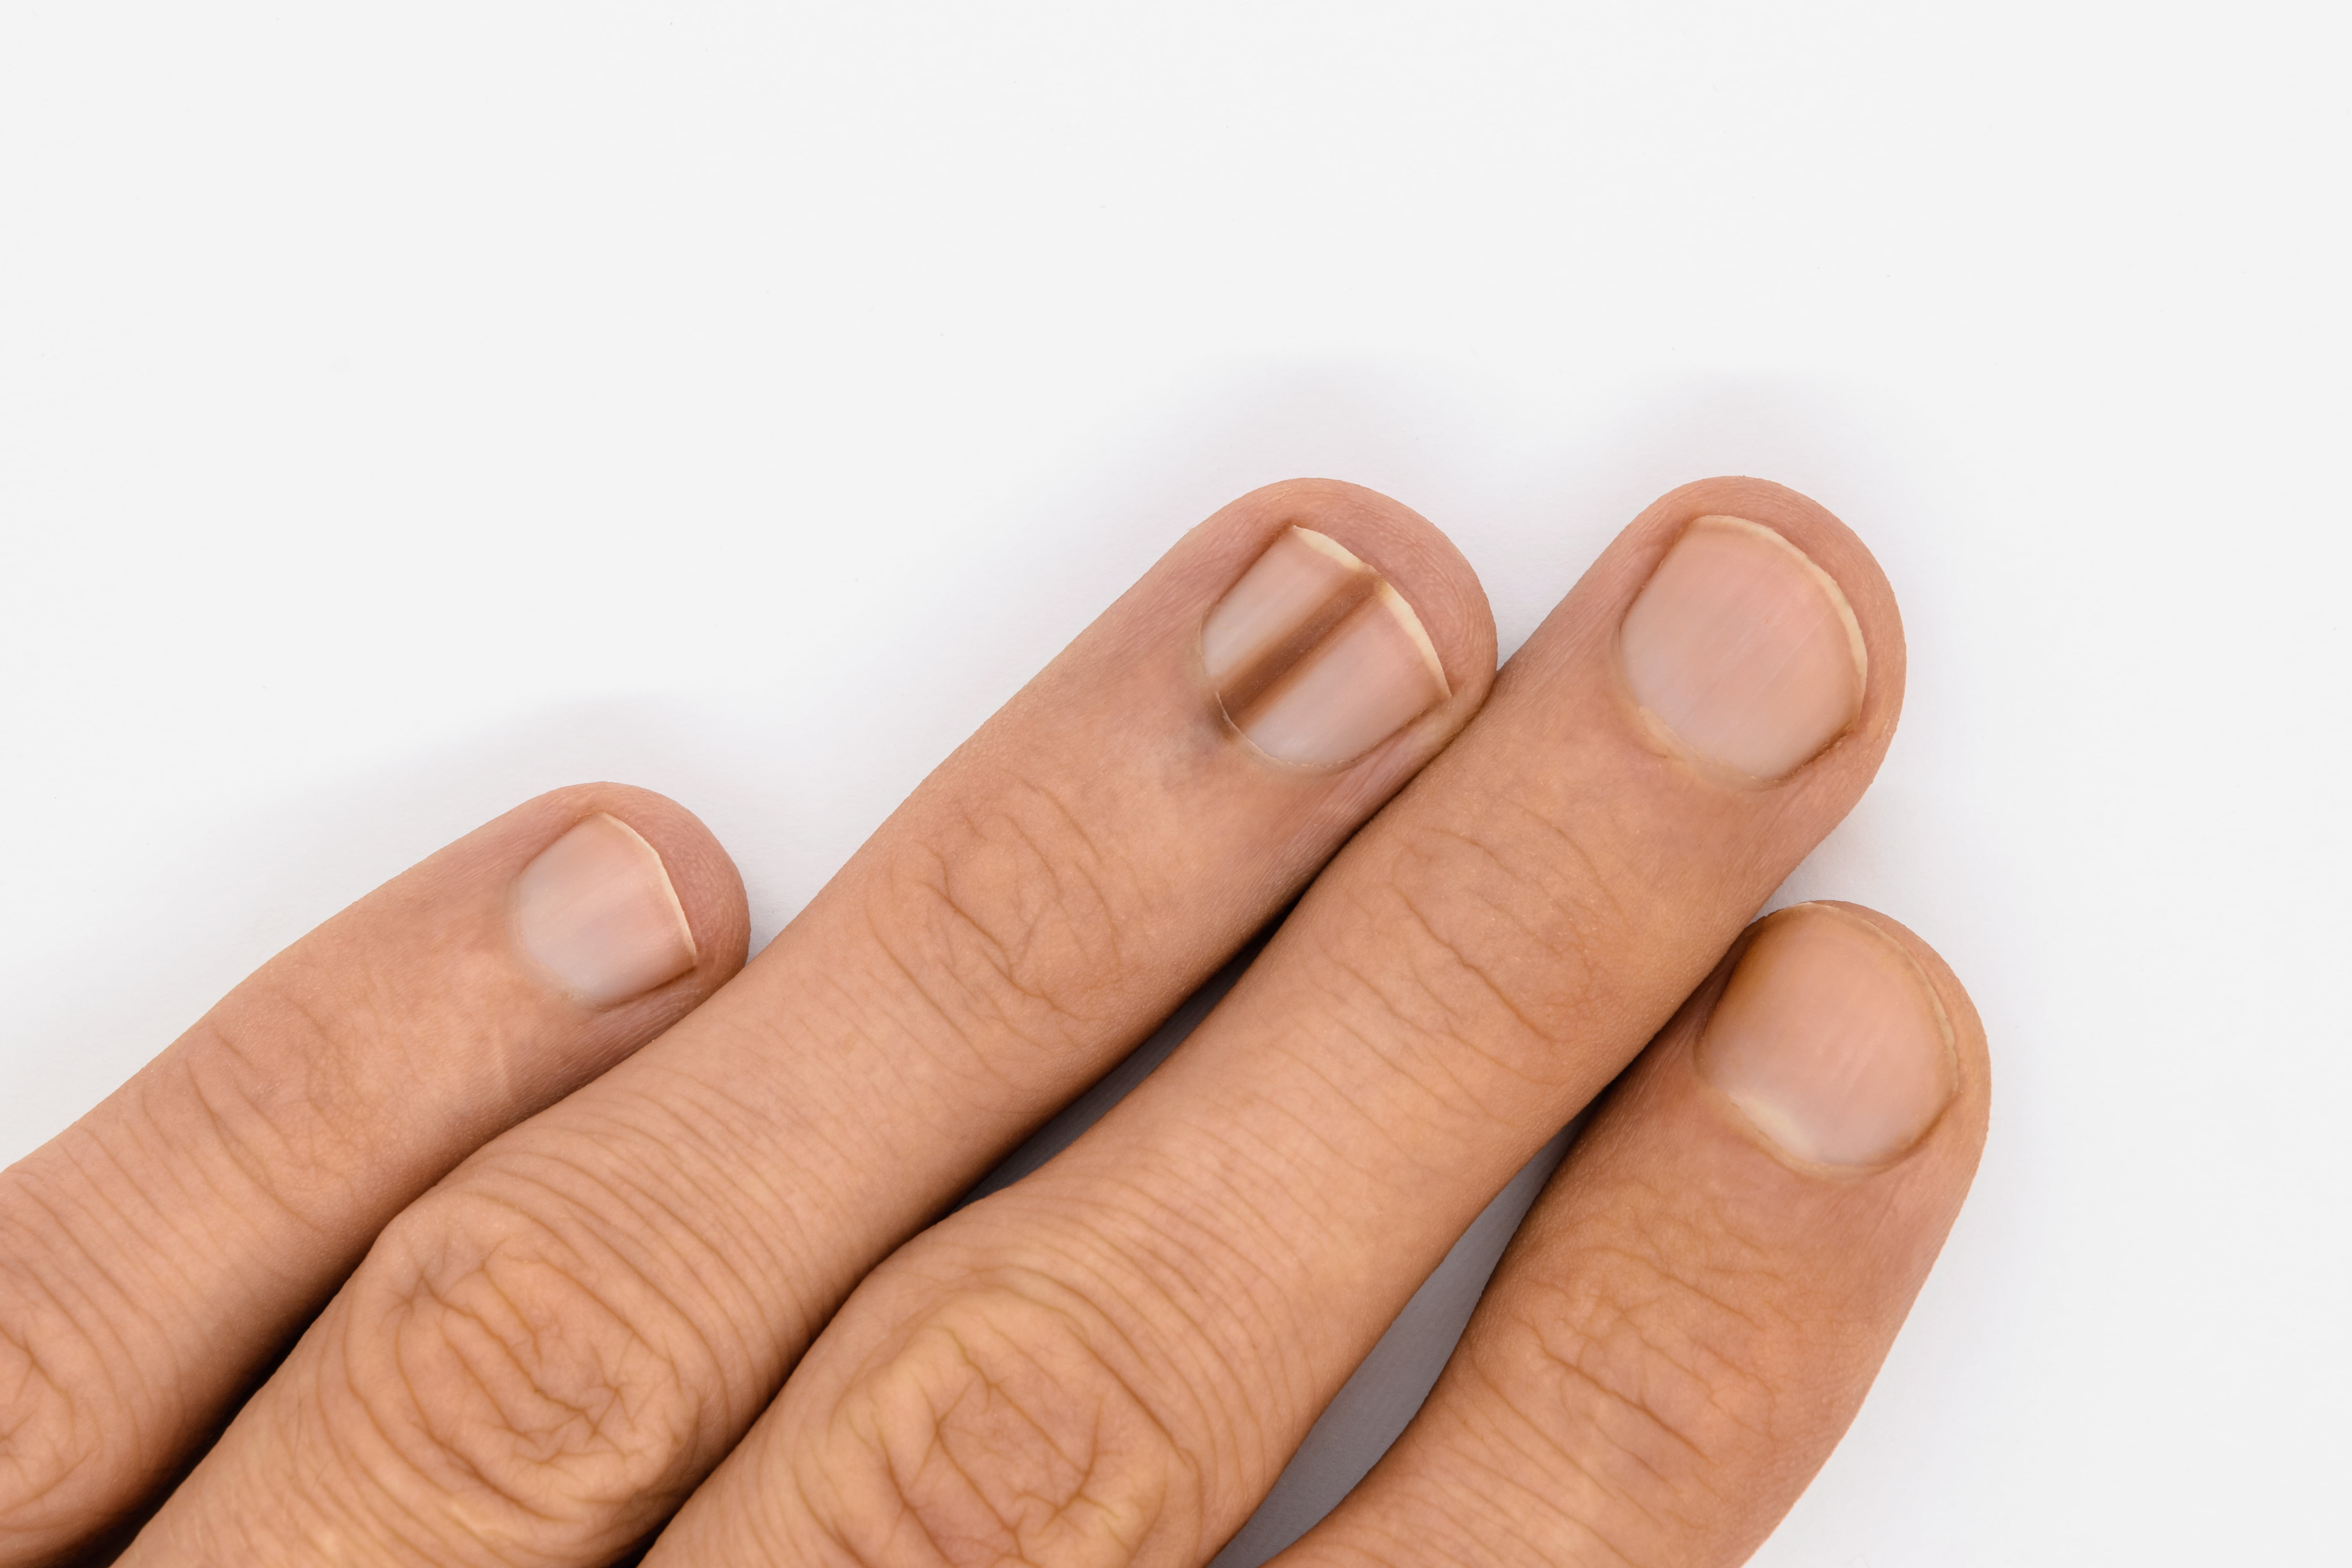 Pin on Fingernail health